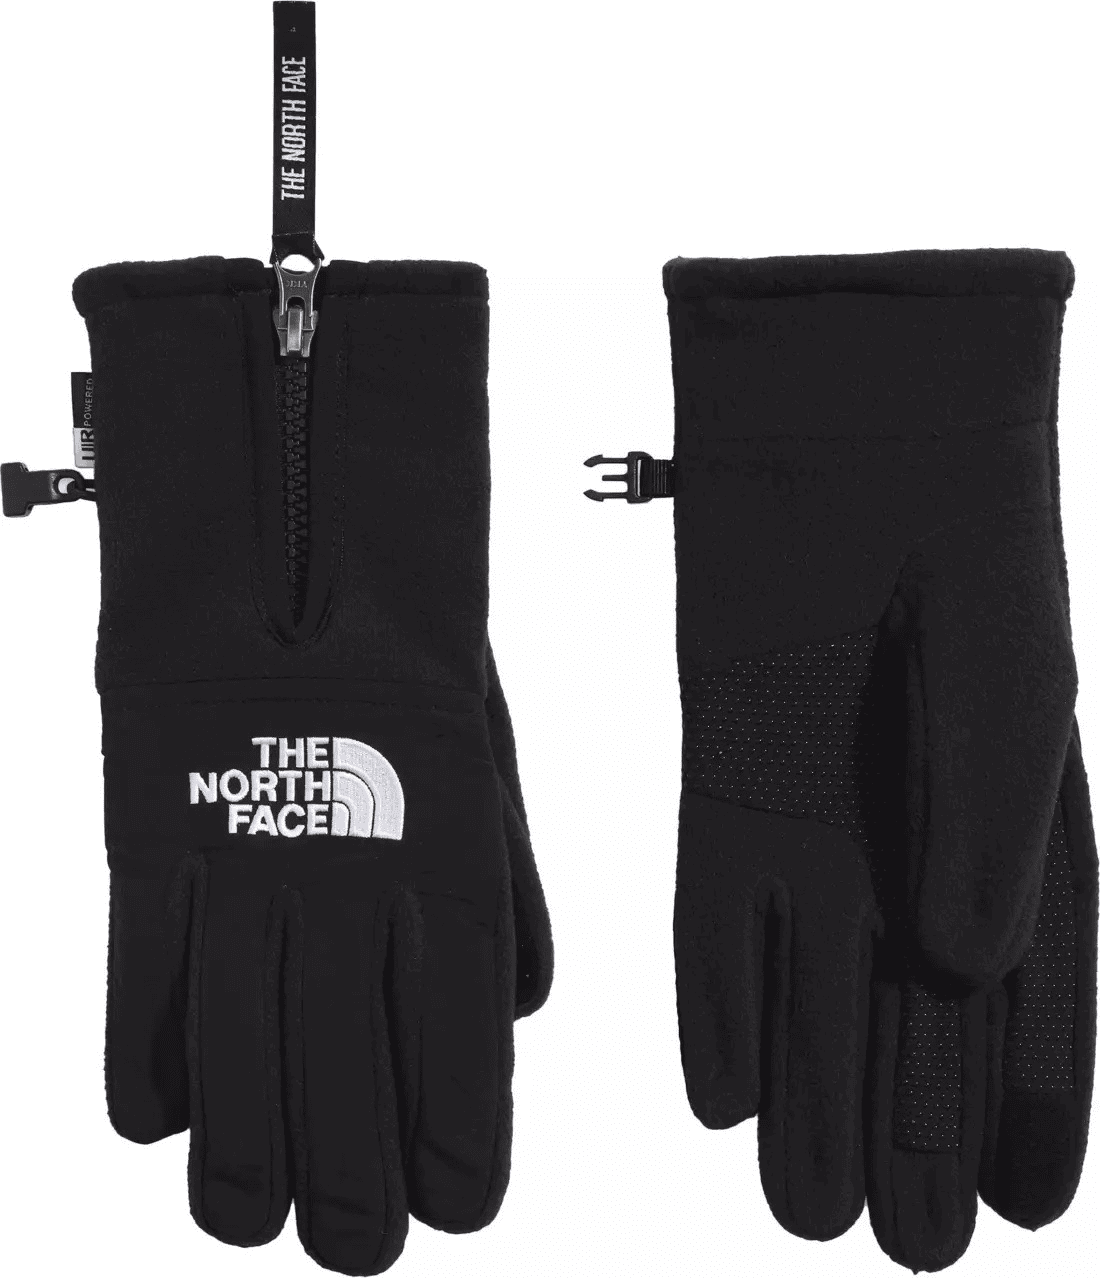 North Face Denali Etip Gloves, the best winter gloves, best women's winter gloves, waterproof membrane